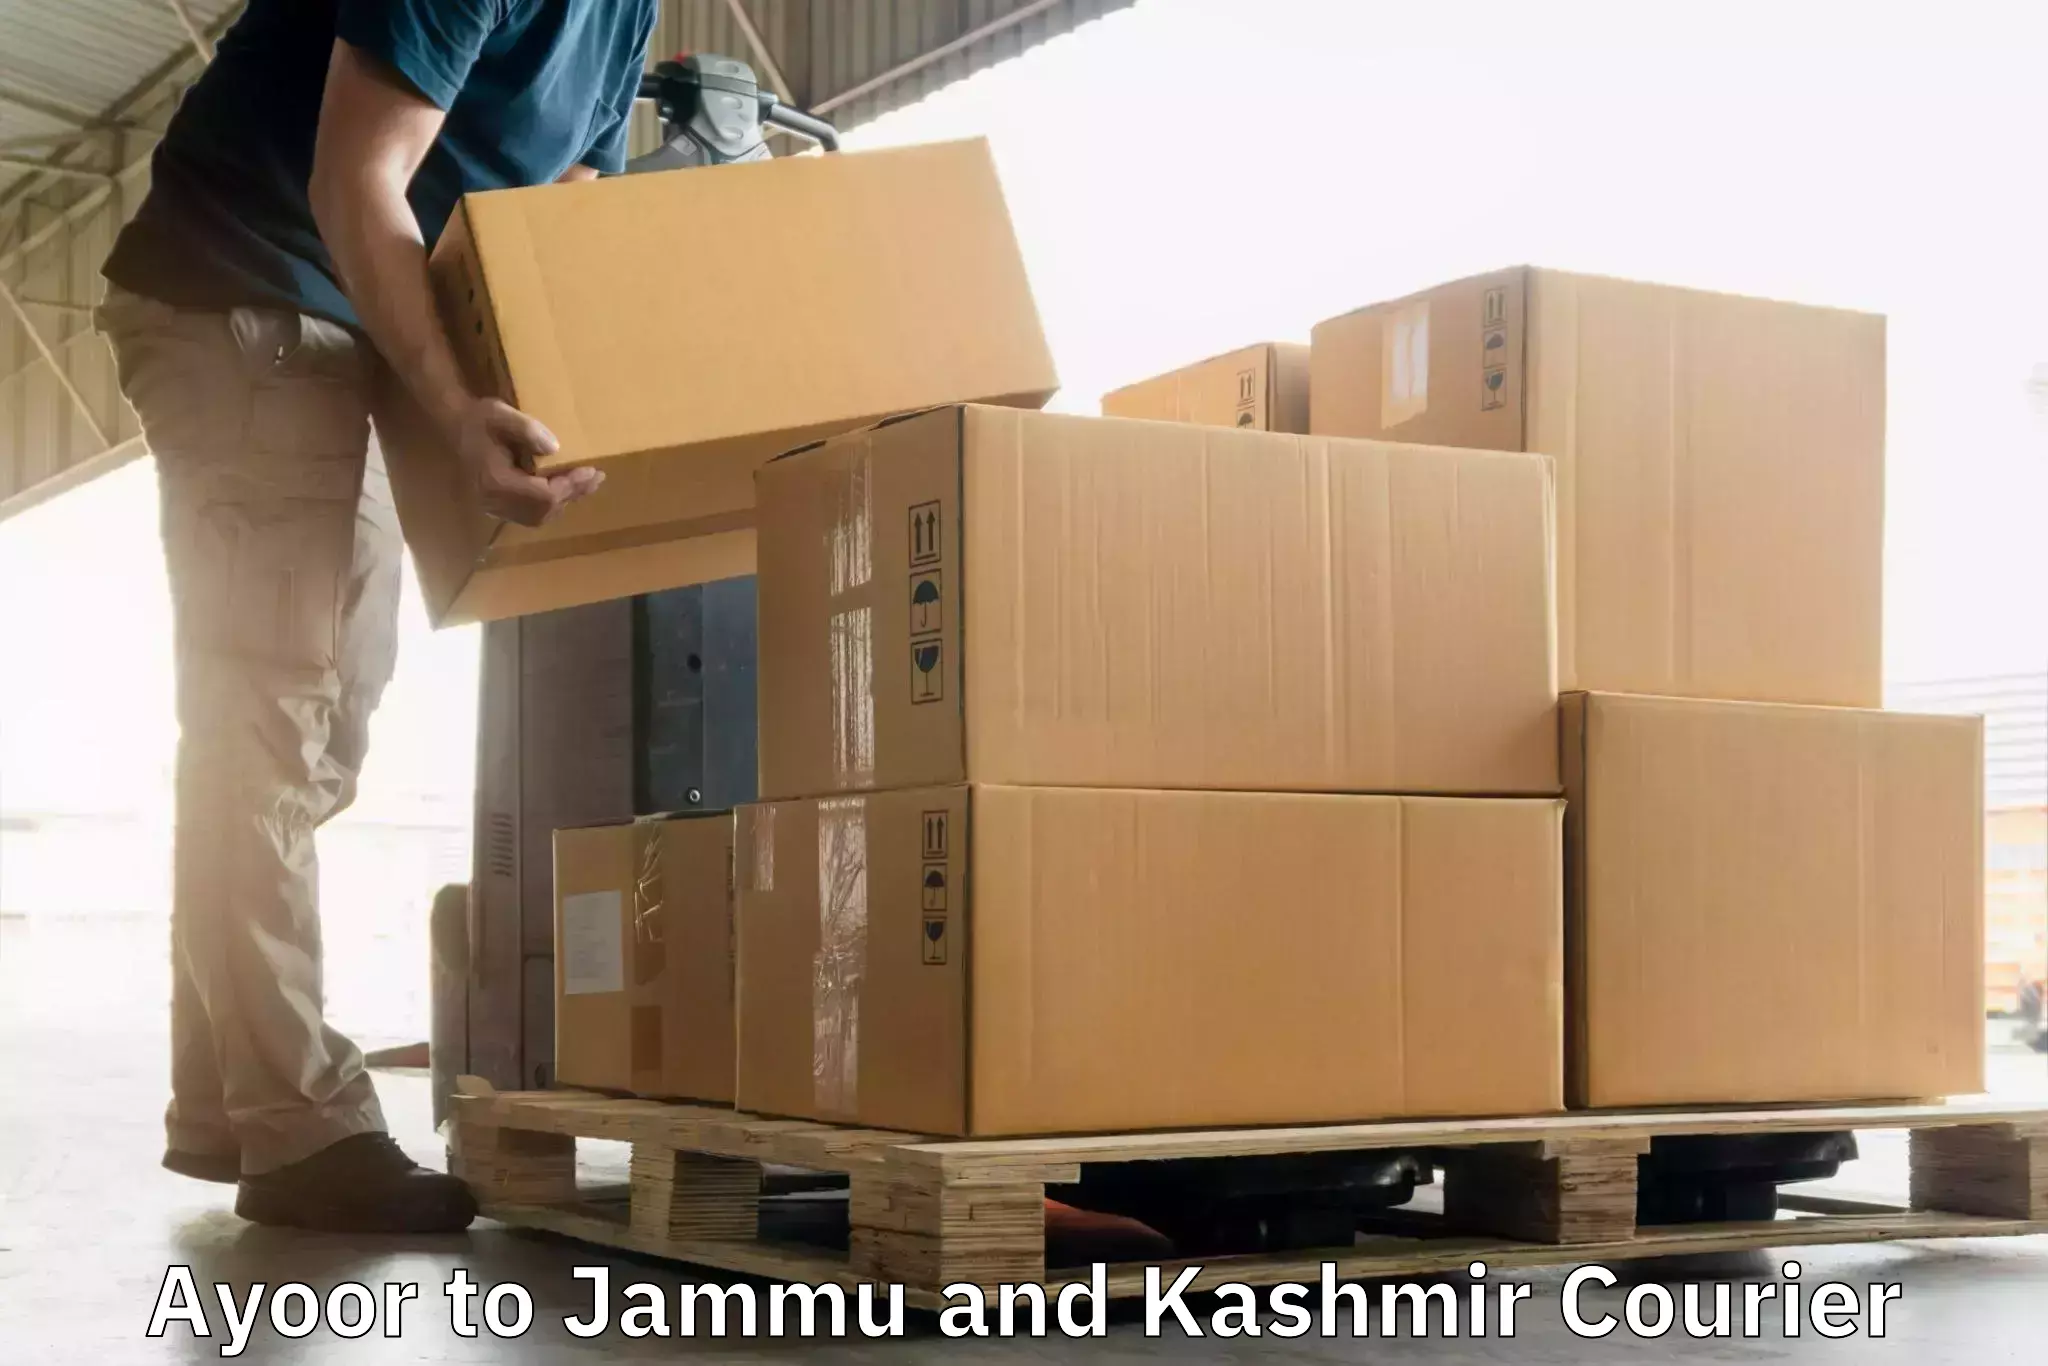 Express courier capabilities Ayoor to Jammu